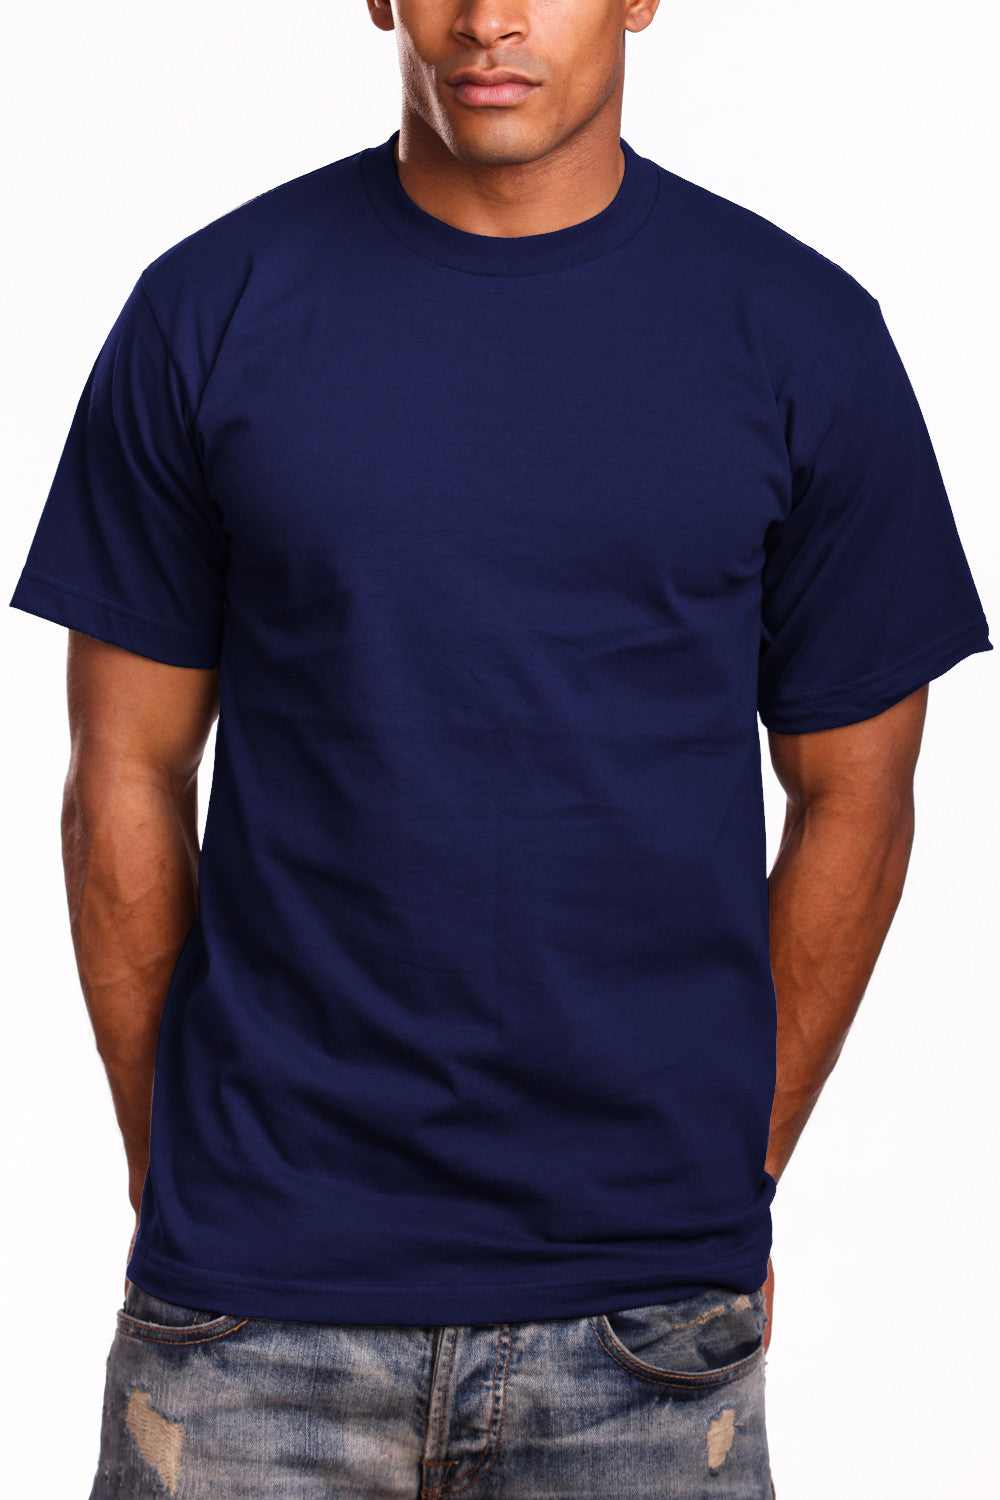 blue raglan shirt